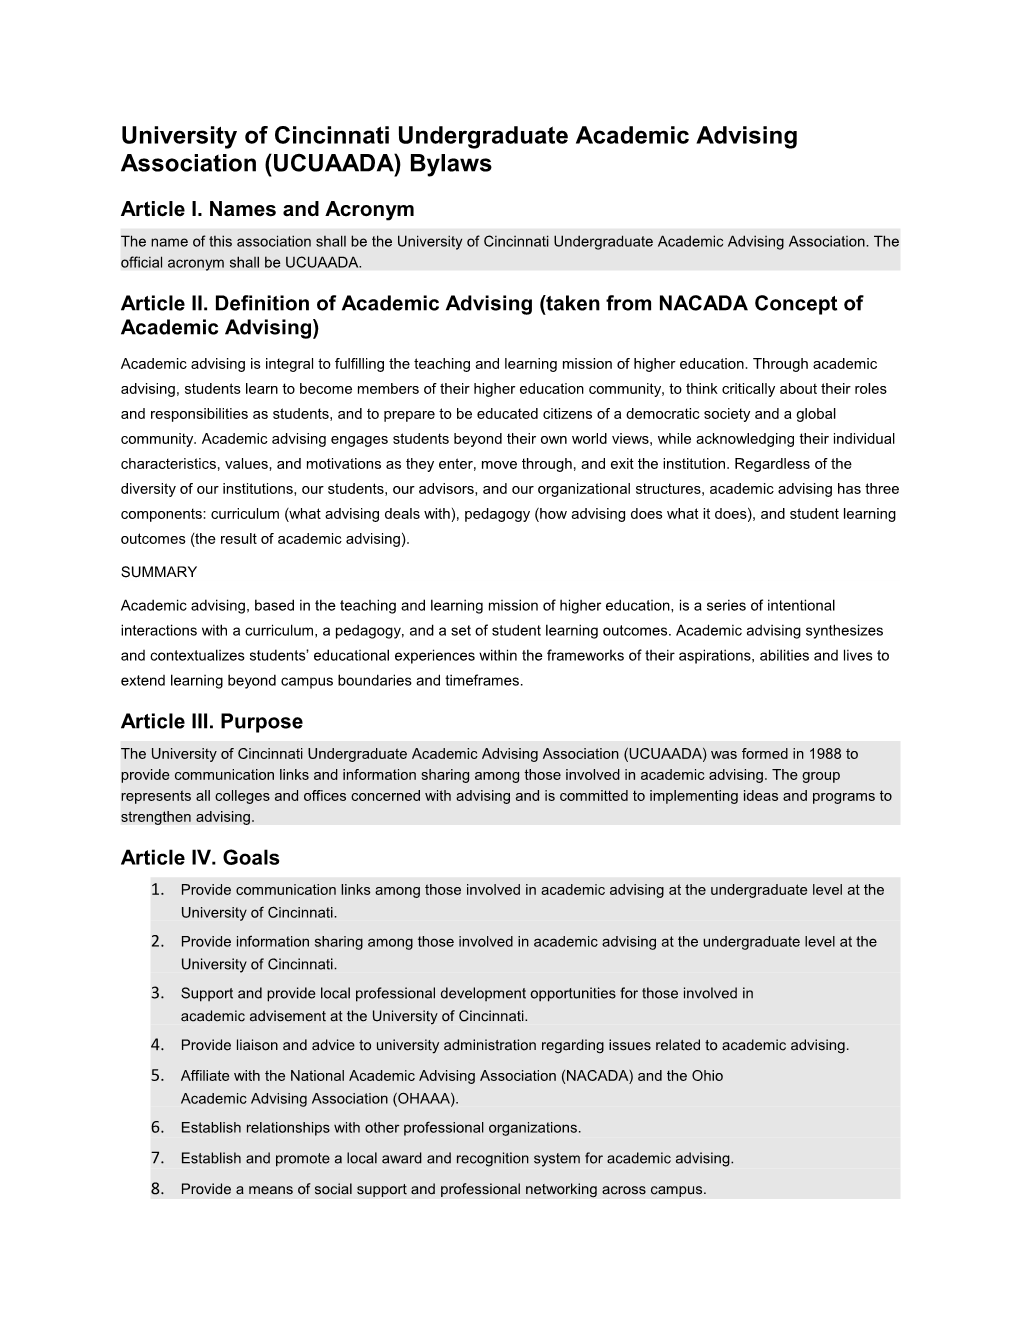 University of Cincinnati Undergraduate Academic Advising Association (UCUAADA) Bylaws